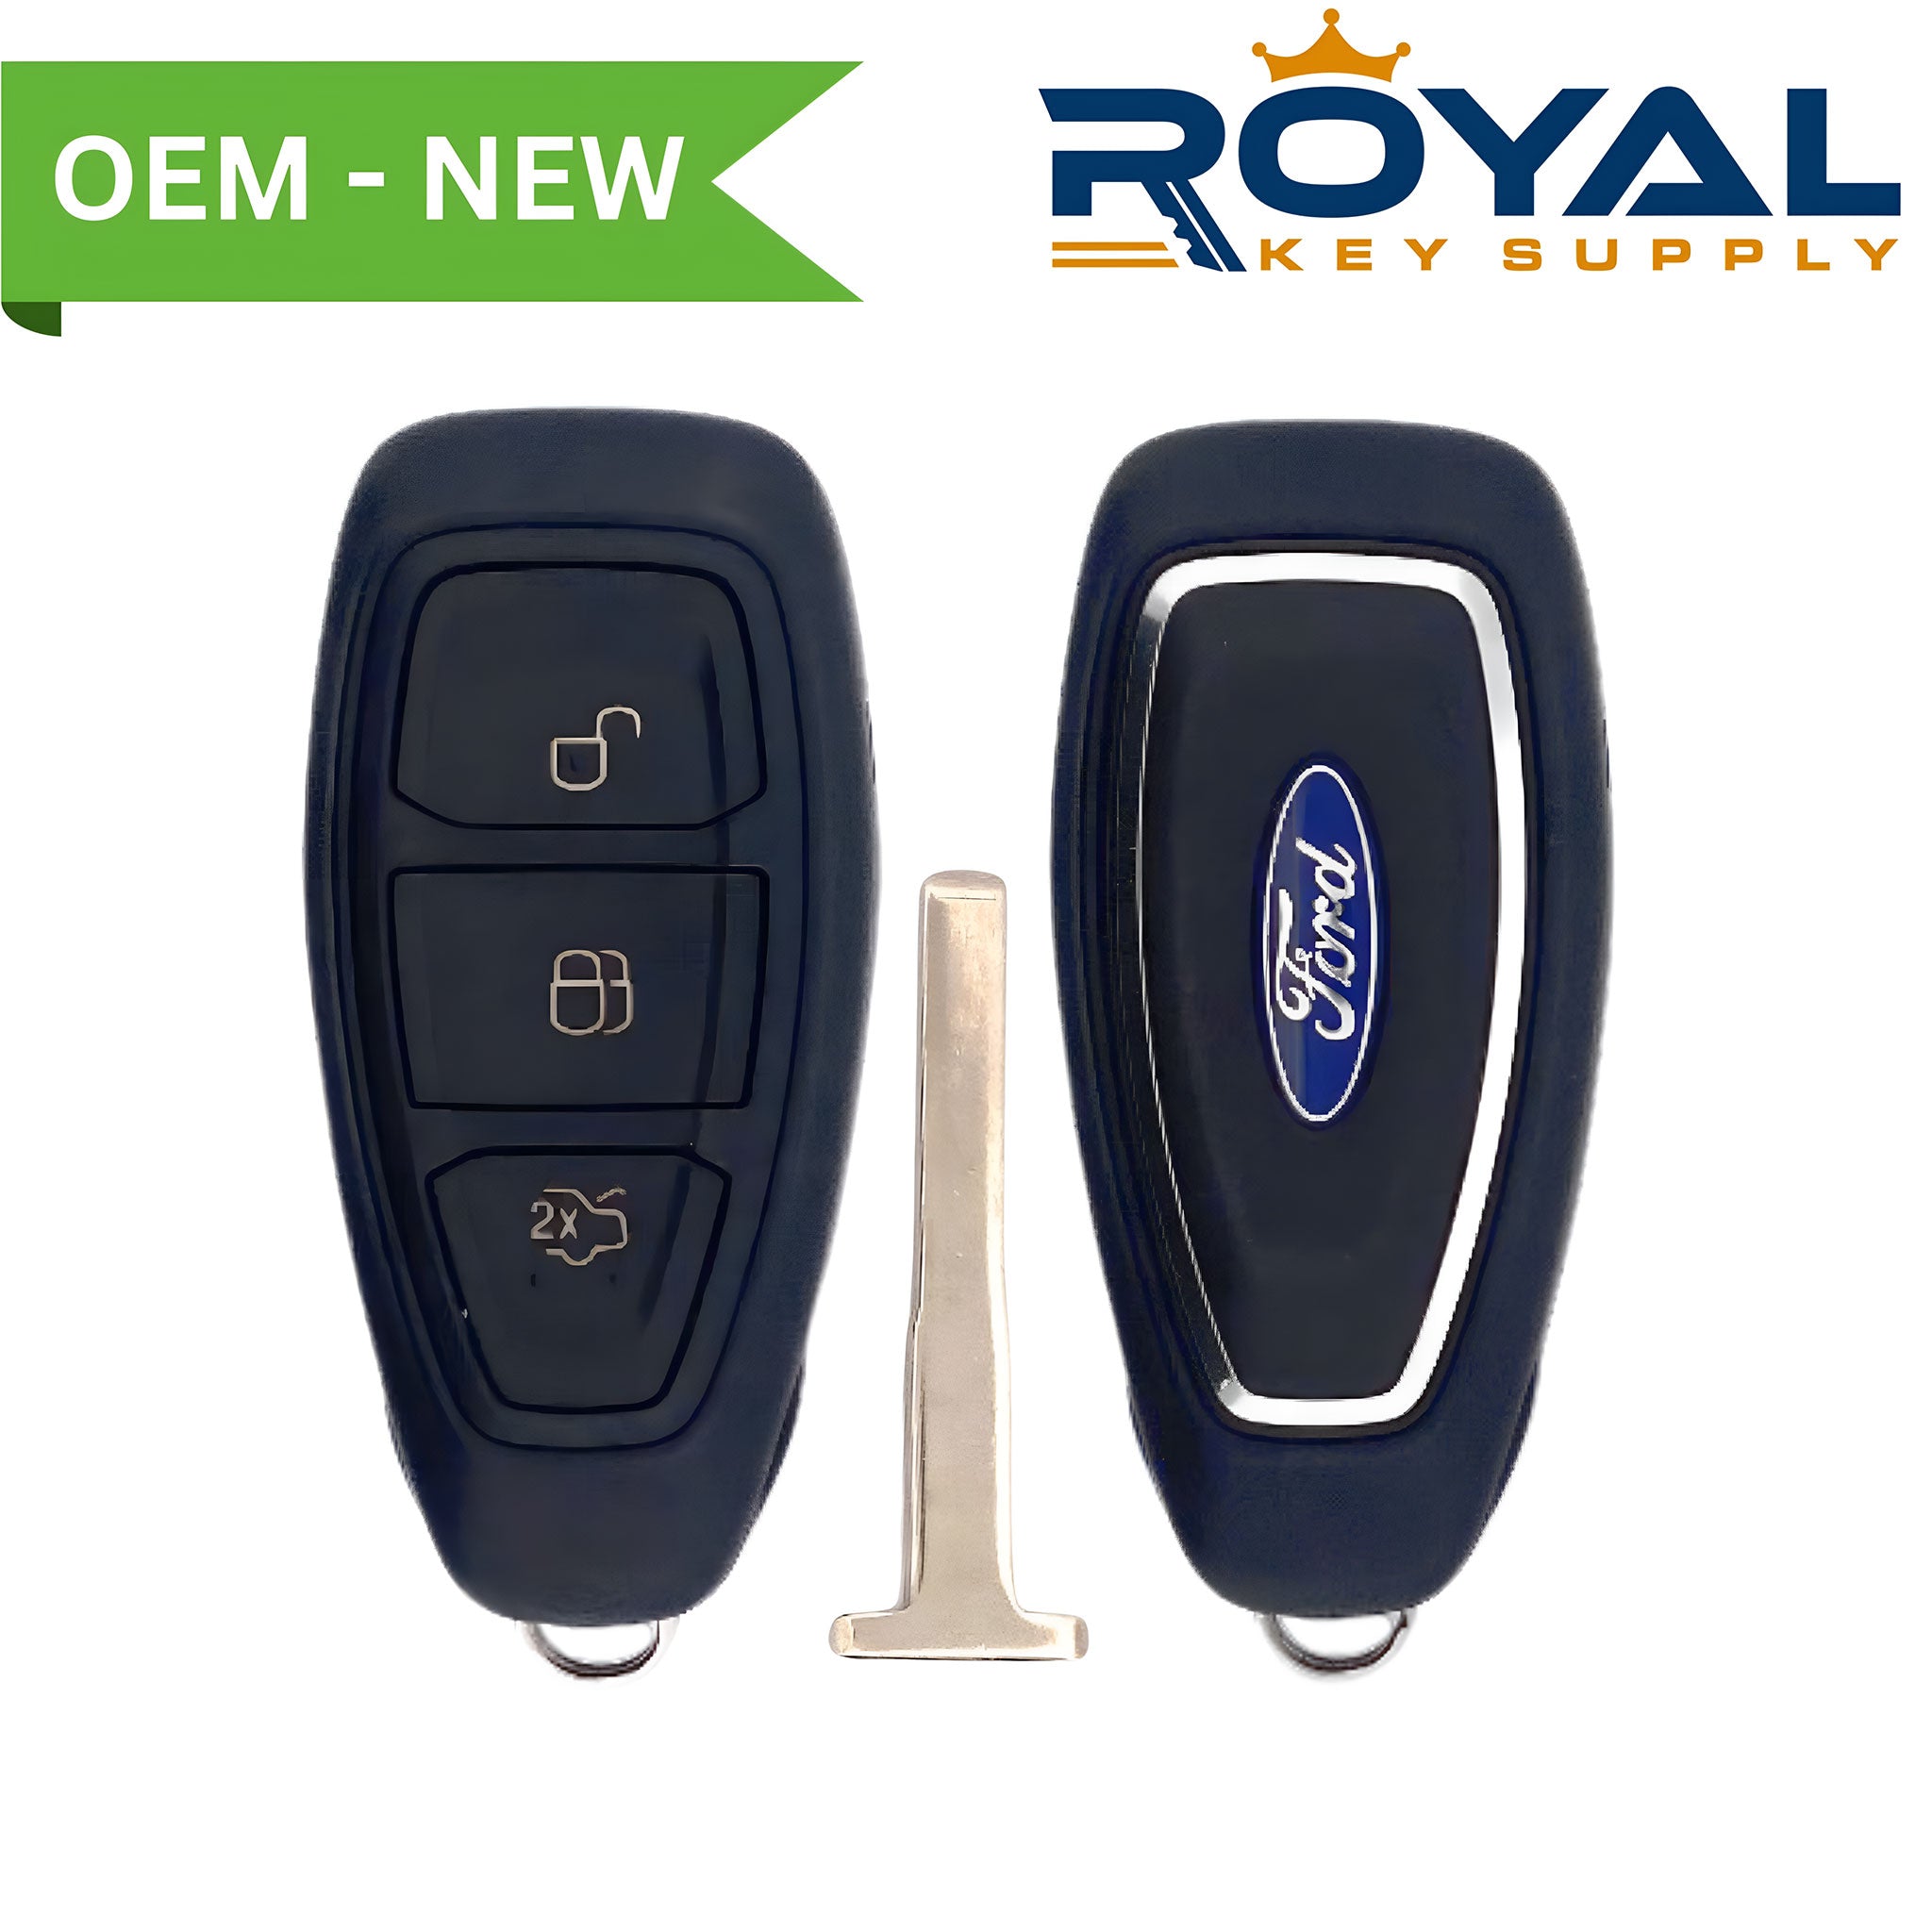 Ford New OEM 2011-2019 Fiesta, C-Max, Focus Smart Key 3B Trunk (No Panic) FCCID: KR55WK48801 PN# 5919918, 164-R8048 - Royal Key Supply